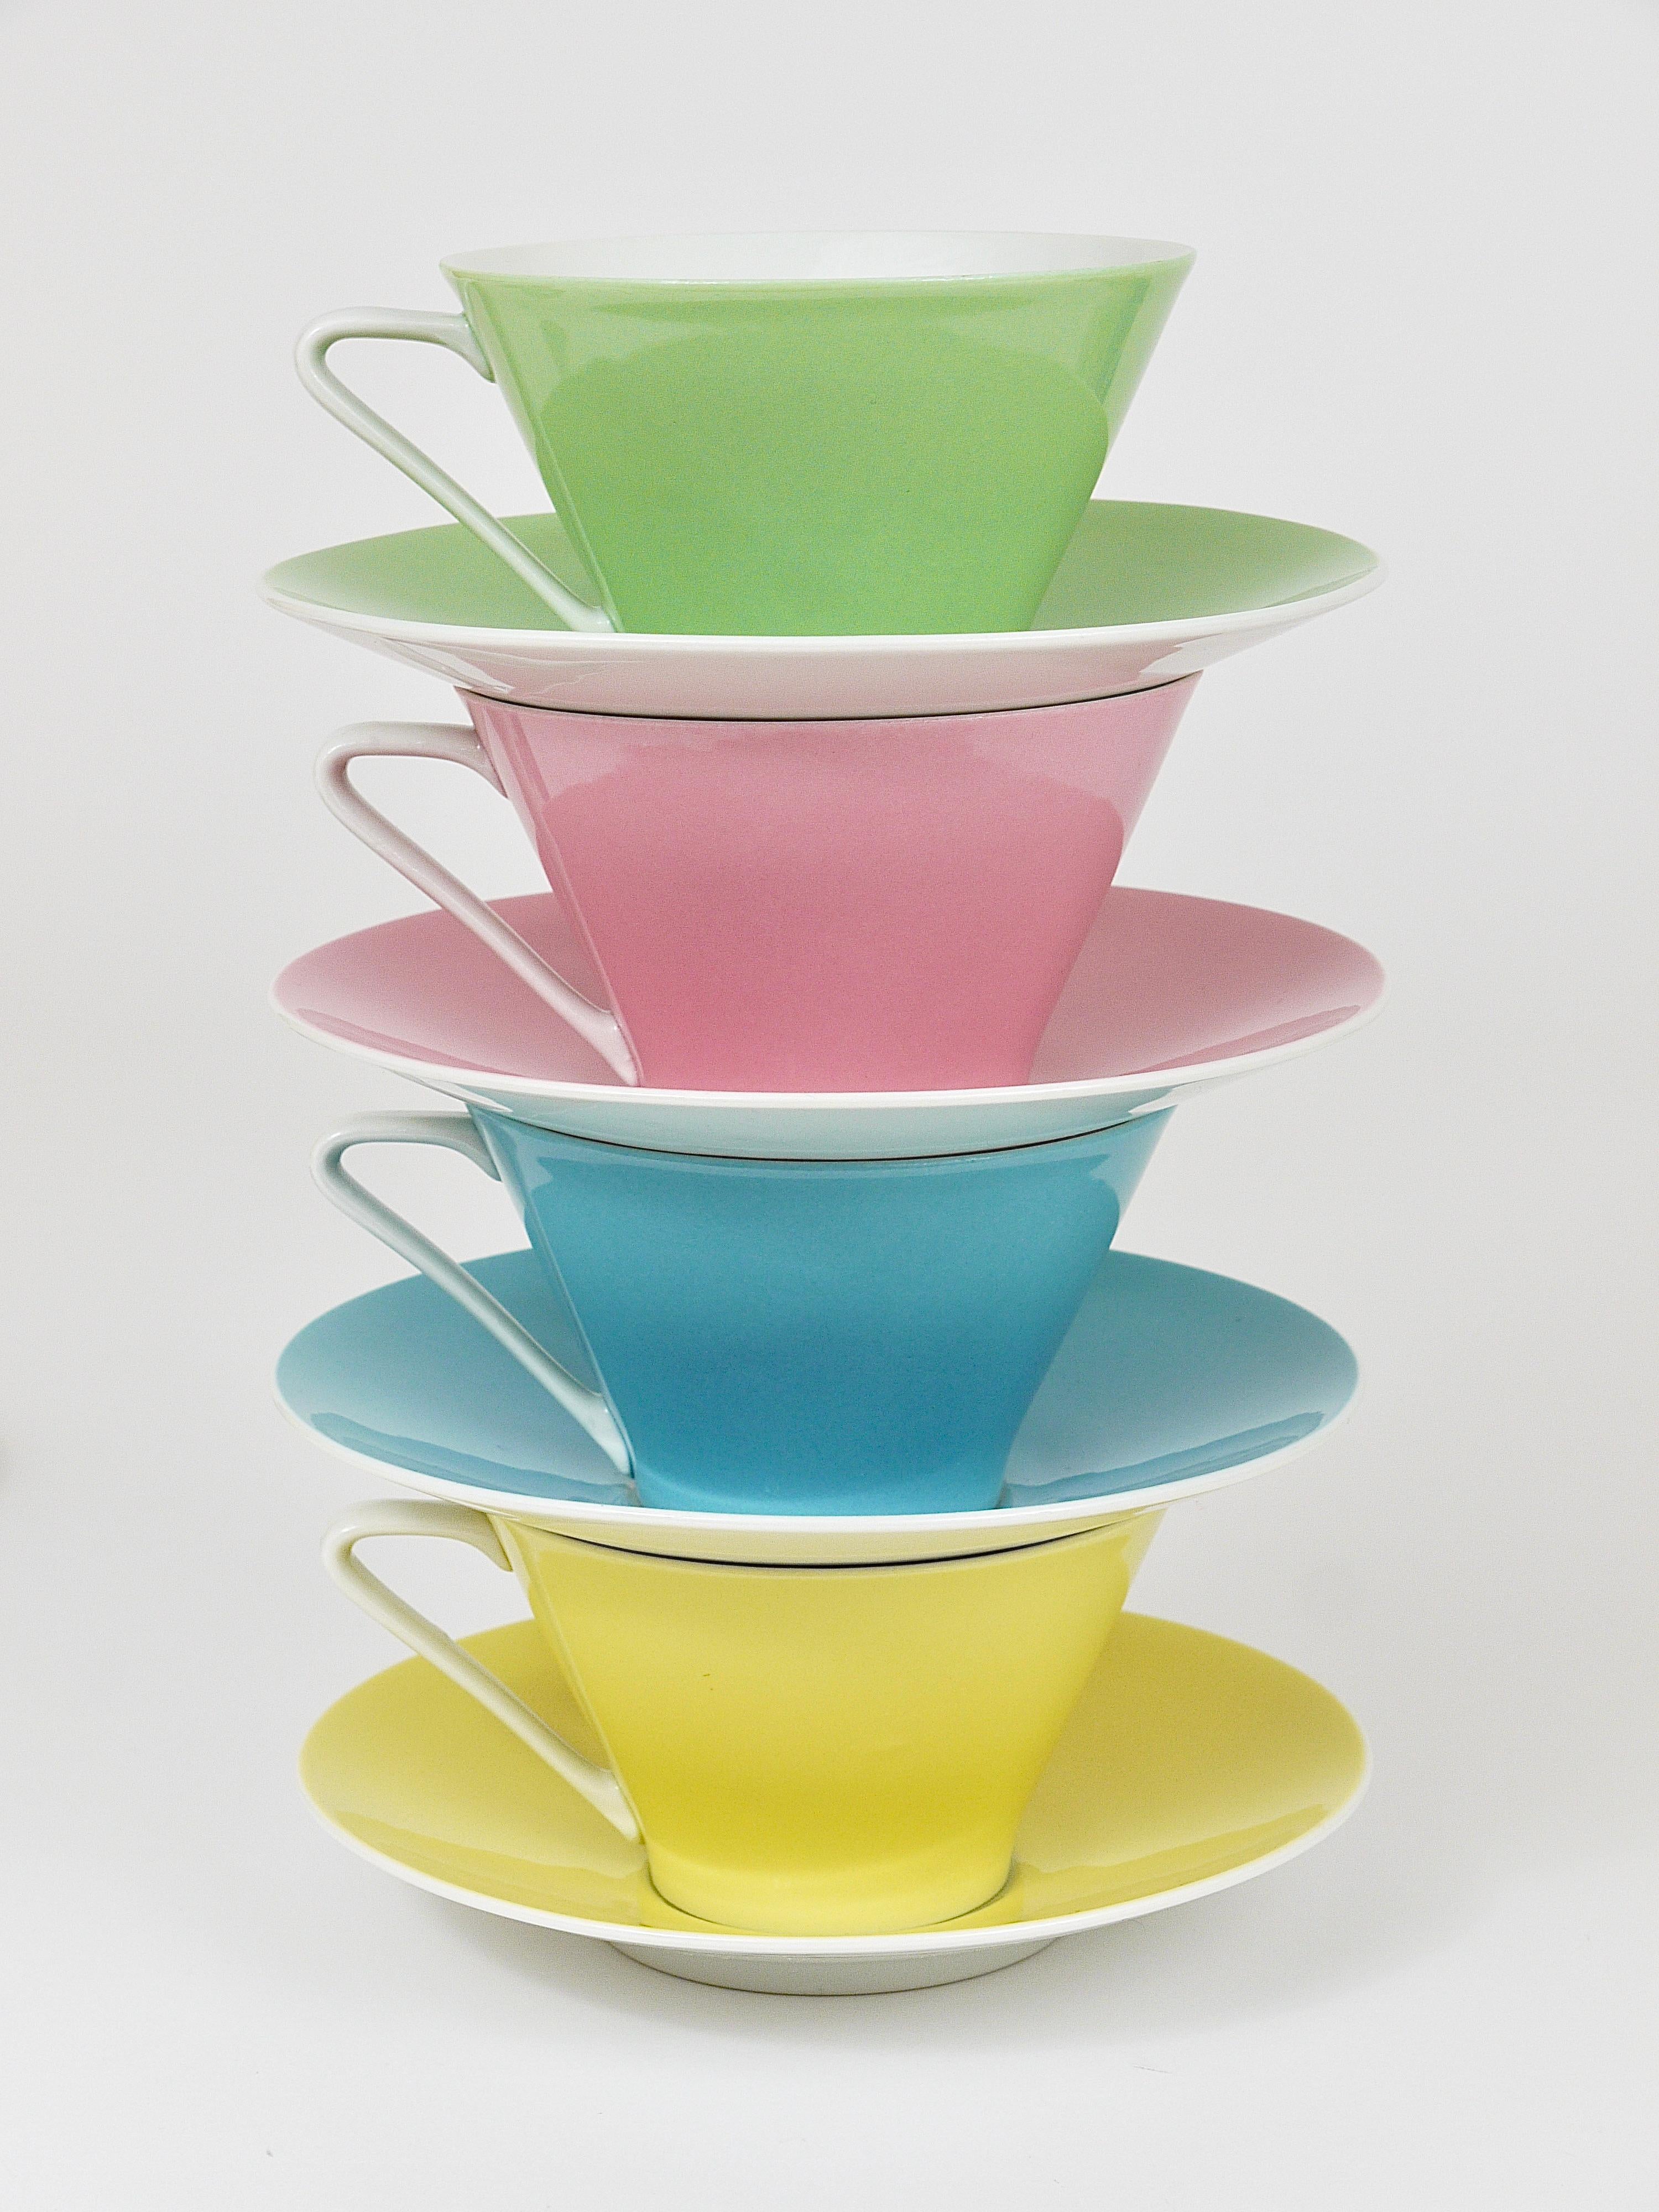 20th Century 6 Midcentury Pastel Daisy Porcelain Coffee Cups, Lilien, Austria, 1950s For Sale